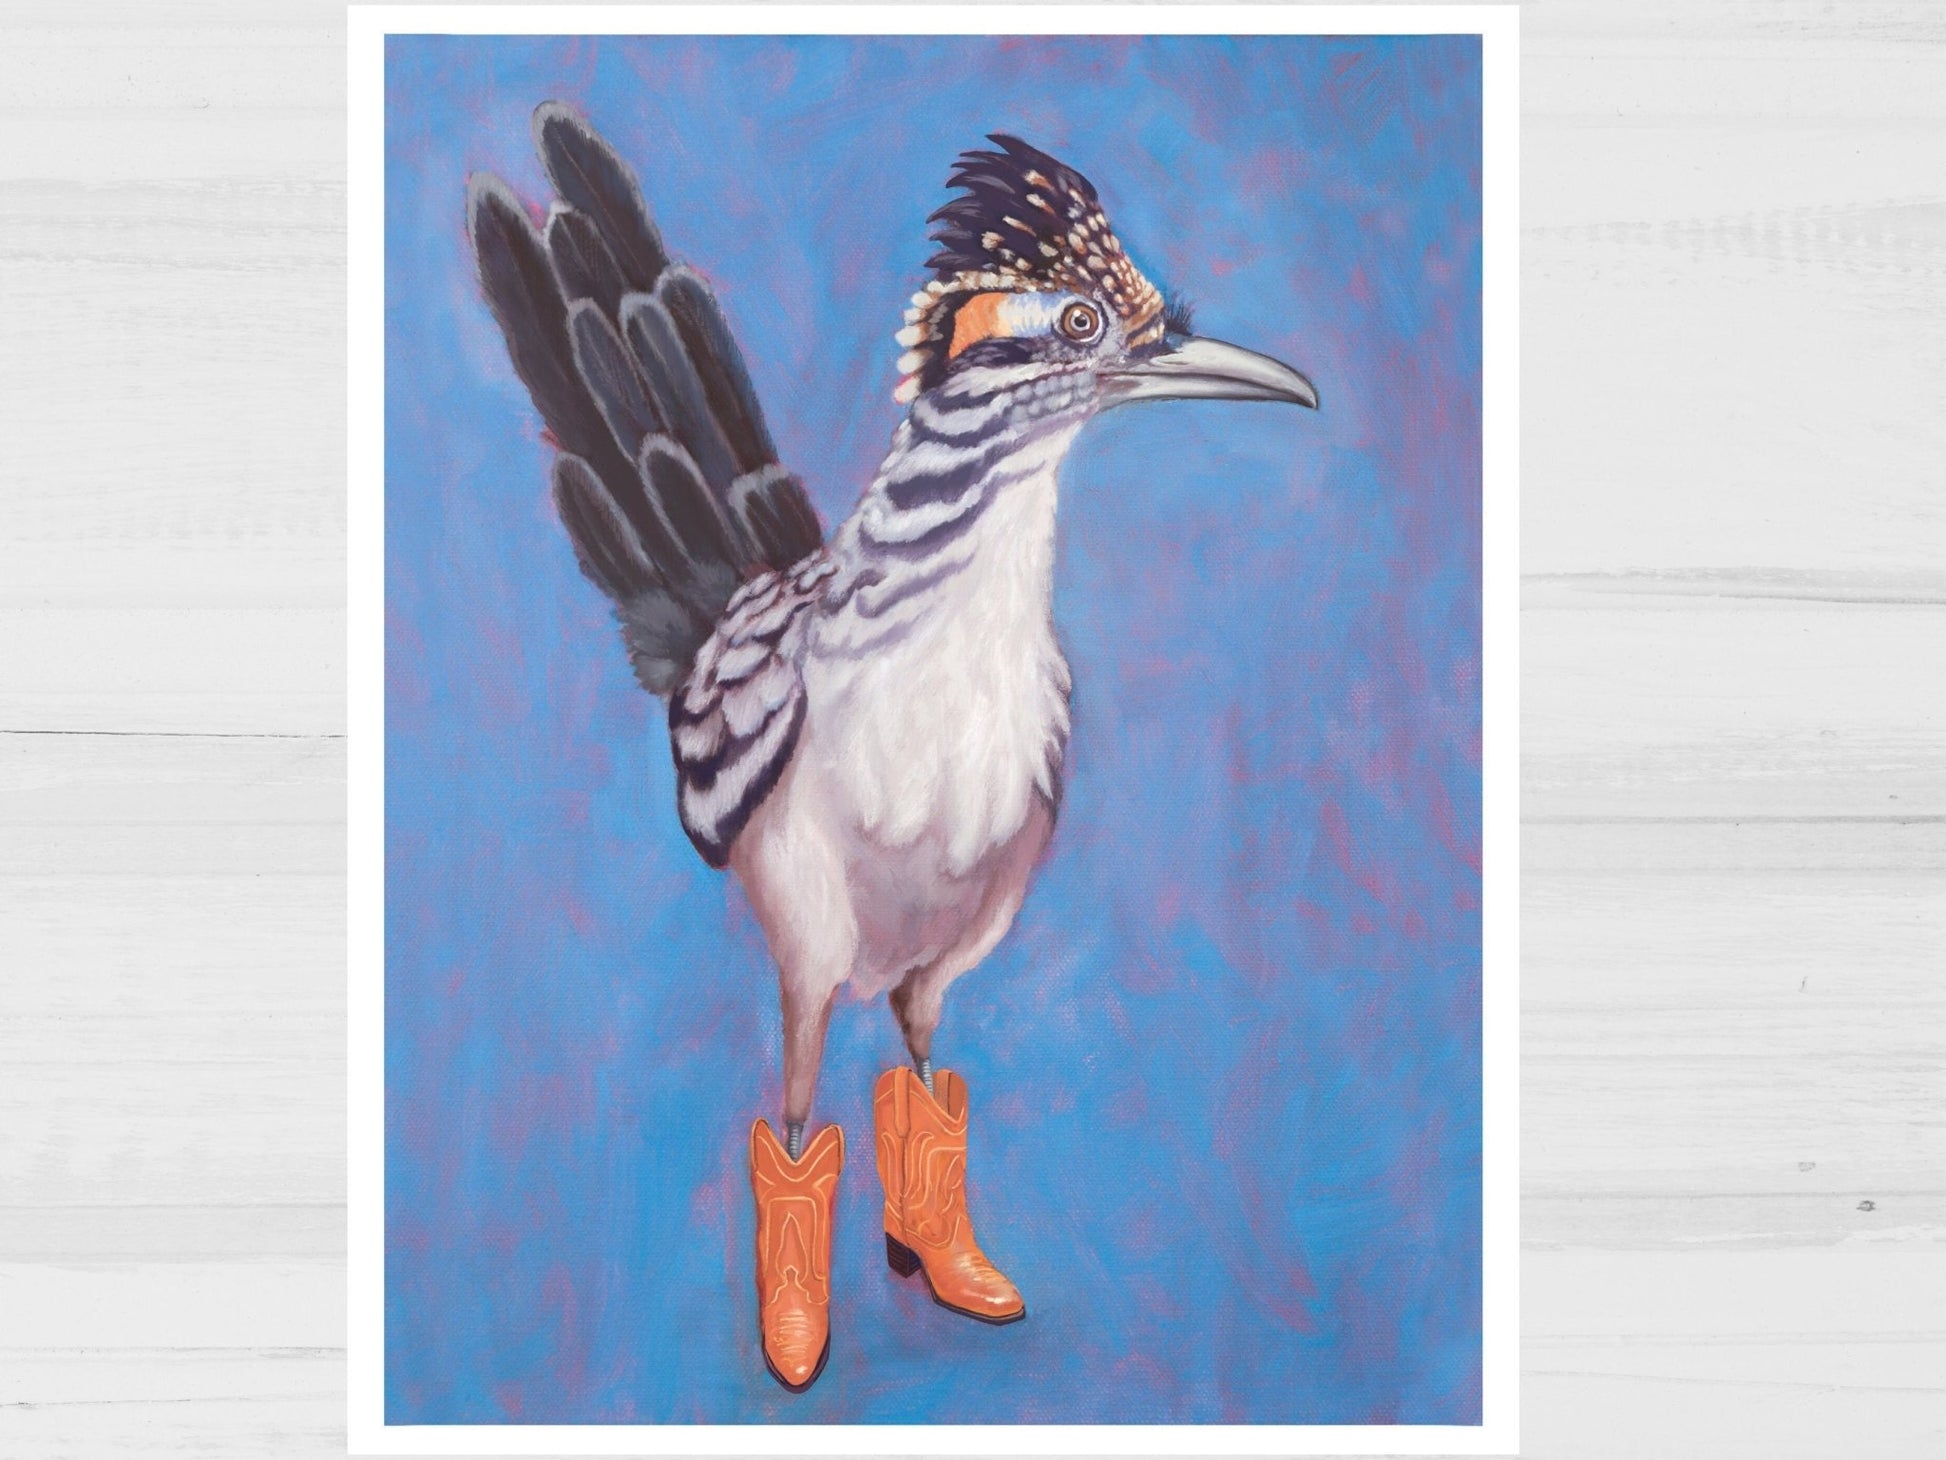 Roadrunner in Boots Art Print | Roadrunner Wall Art | Funny Bird Painting Wall Decor | Western Wall Decor | Painting Art Print - Marissa Joyner Studio